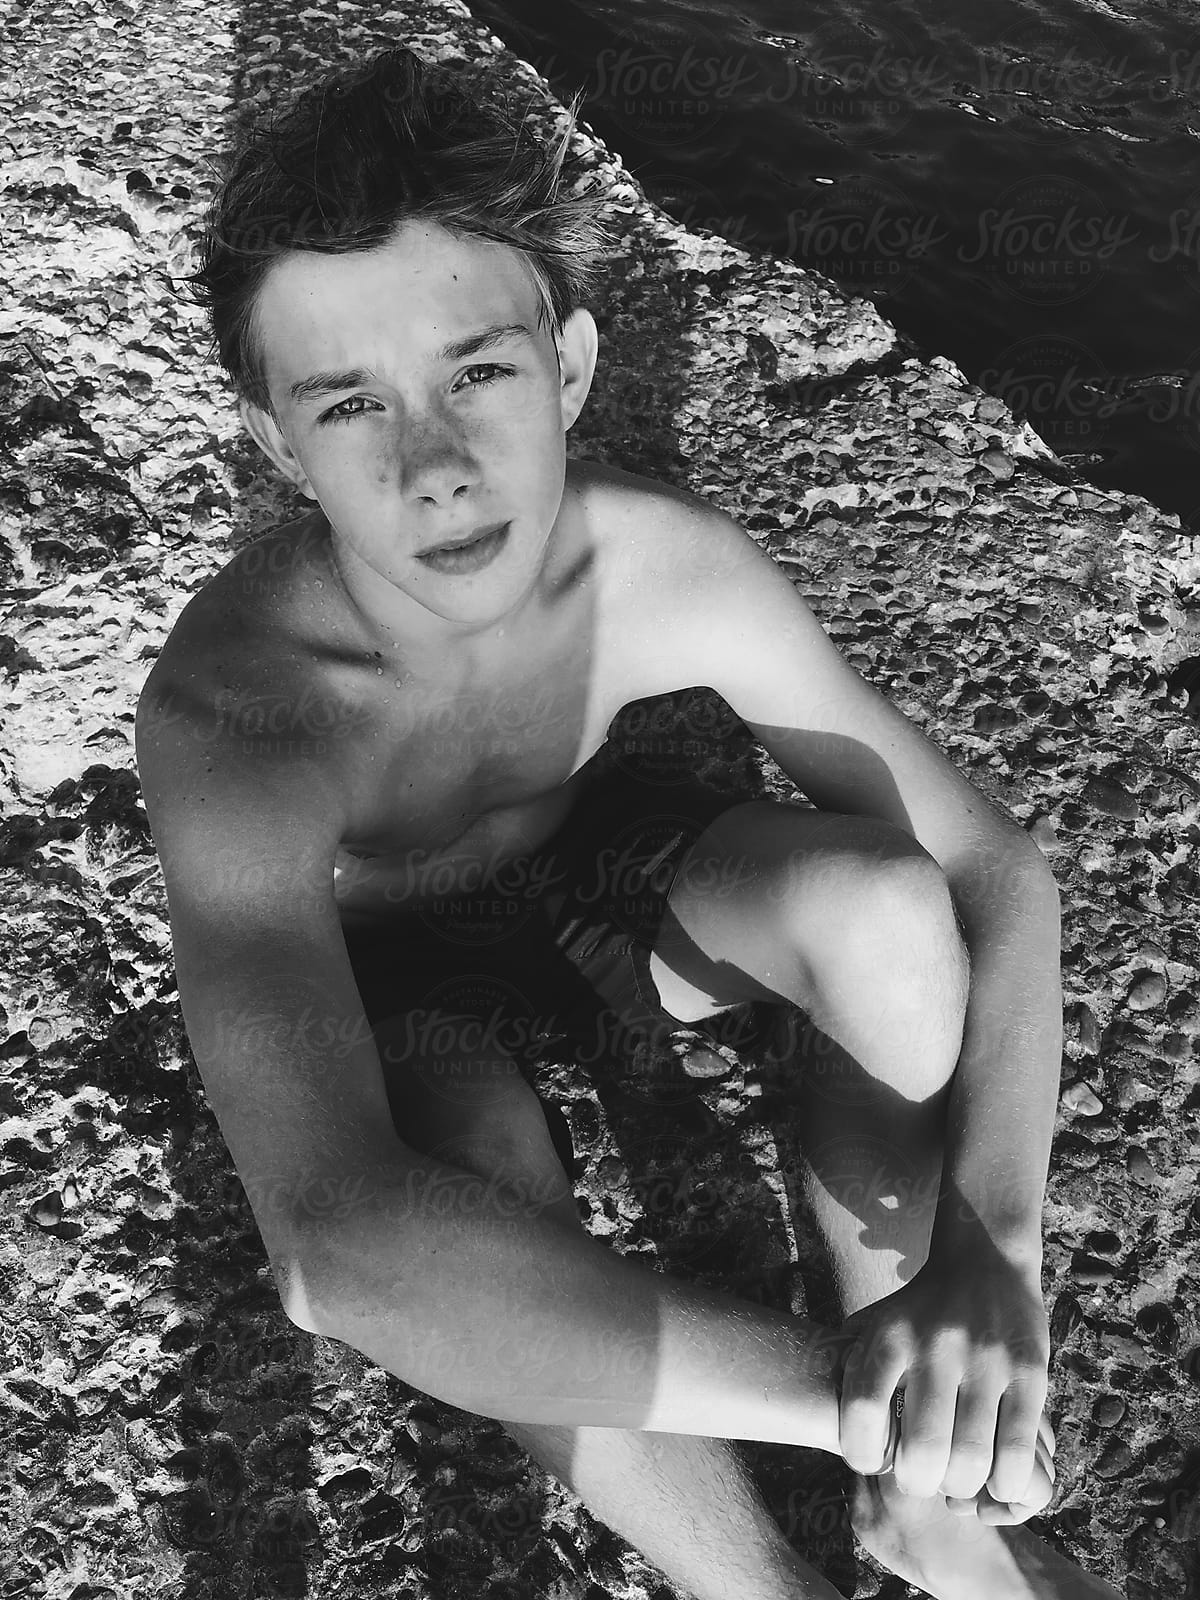 A young boy on a beach